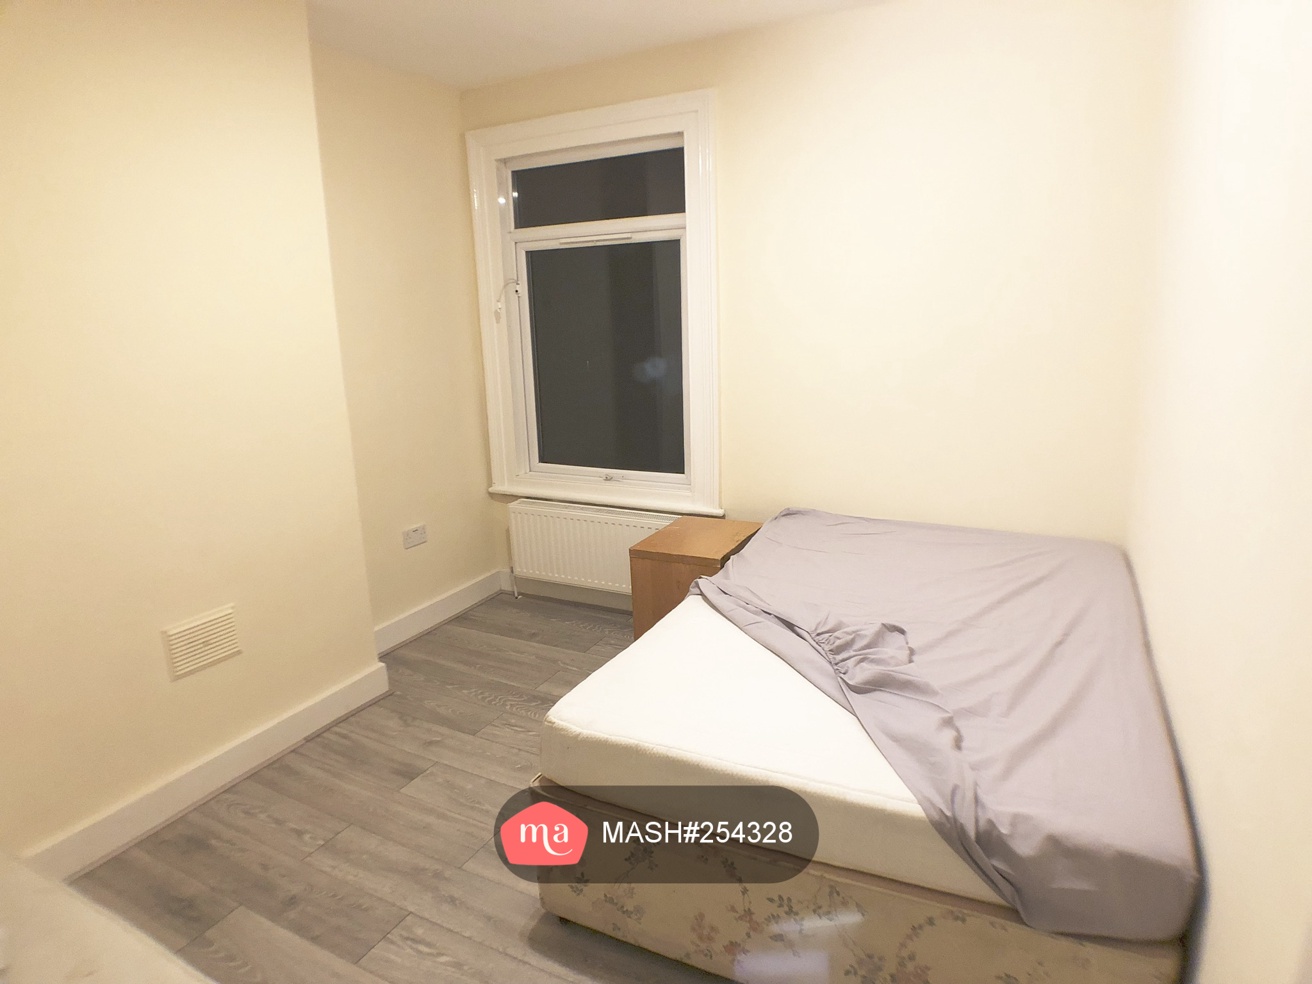 6 Bedroom Terraced to rent in Harrow - Mashroom